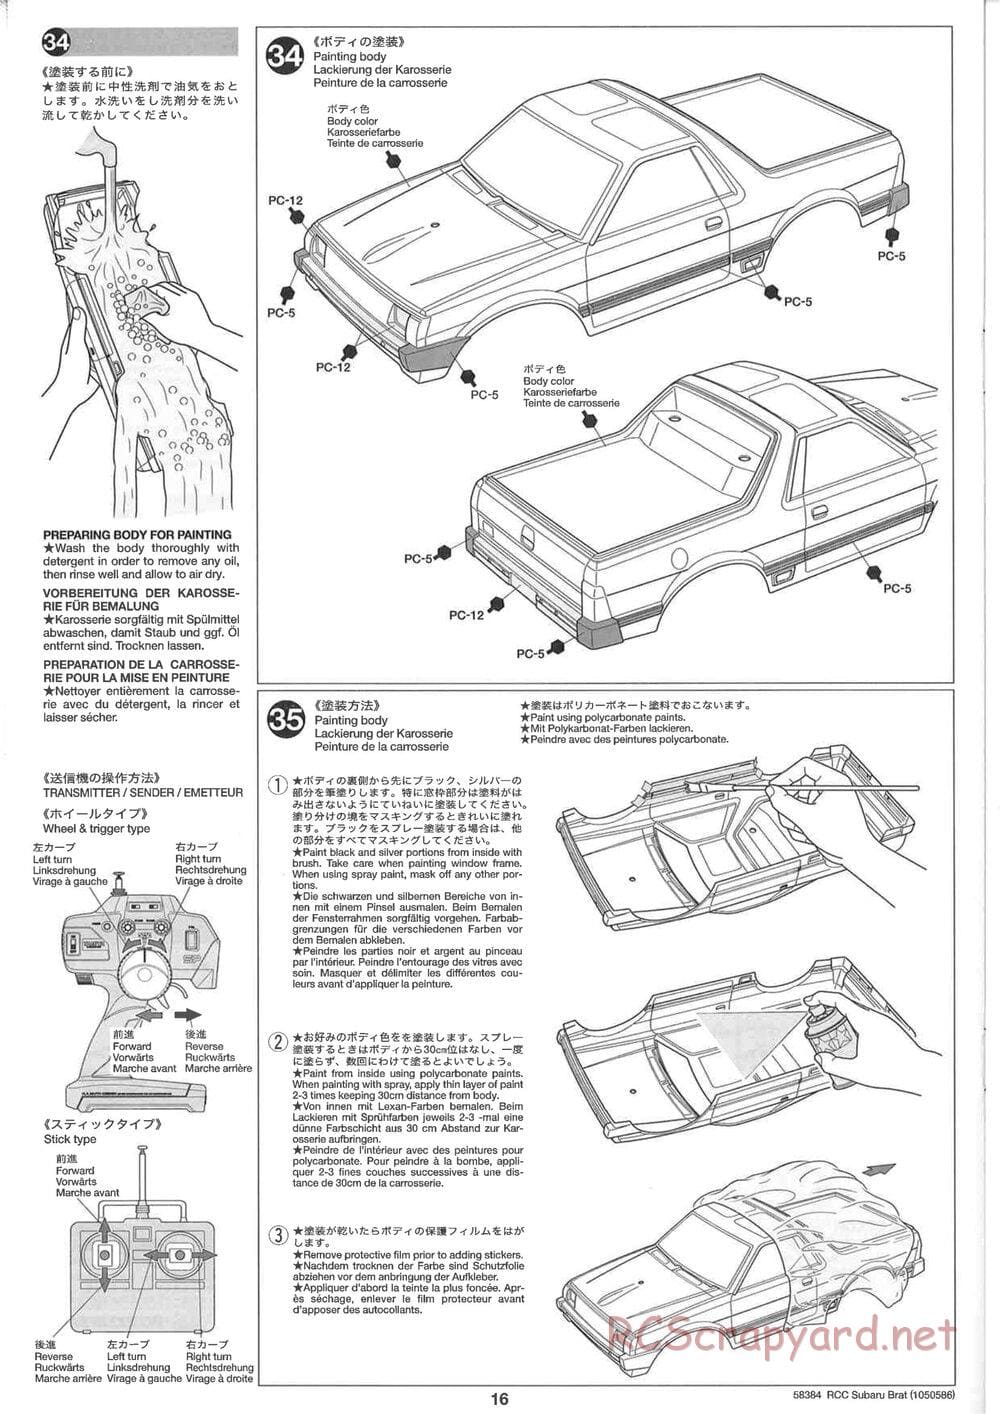 Tamiya - Subaru Brat 2007 - ORV Chassis - Manual - Page 16